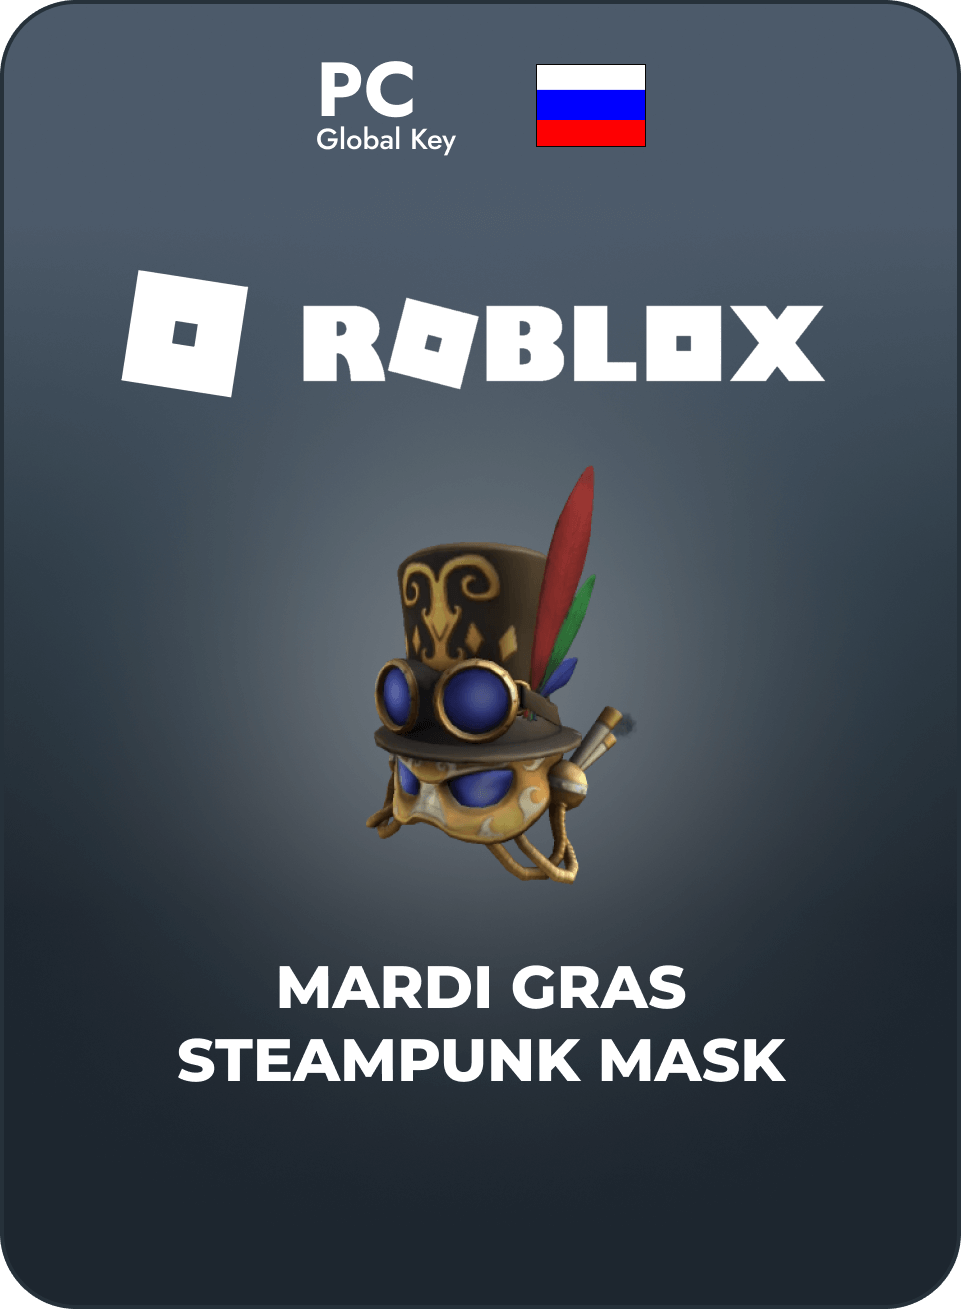 Купить Mardi Gras Steampunk Mask скин для игры Roblox - KupiKod ...